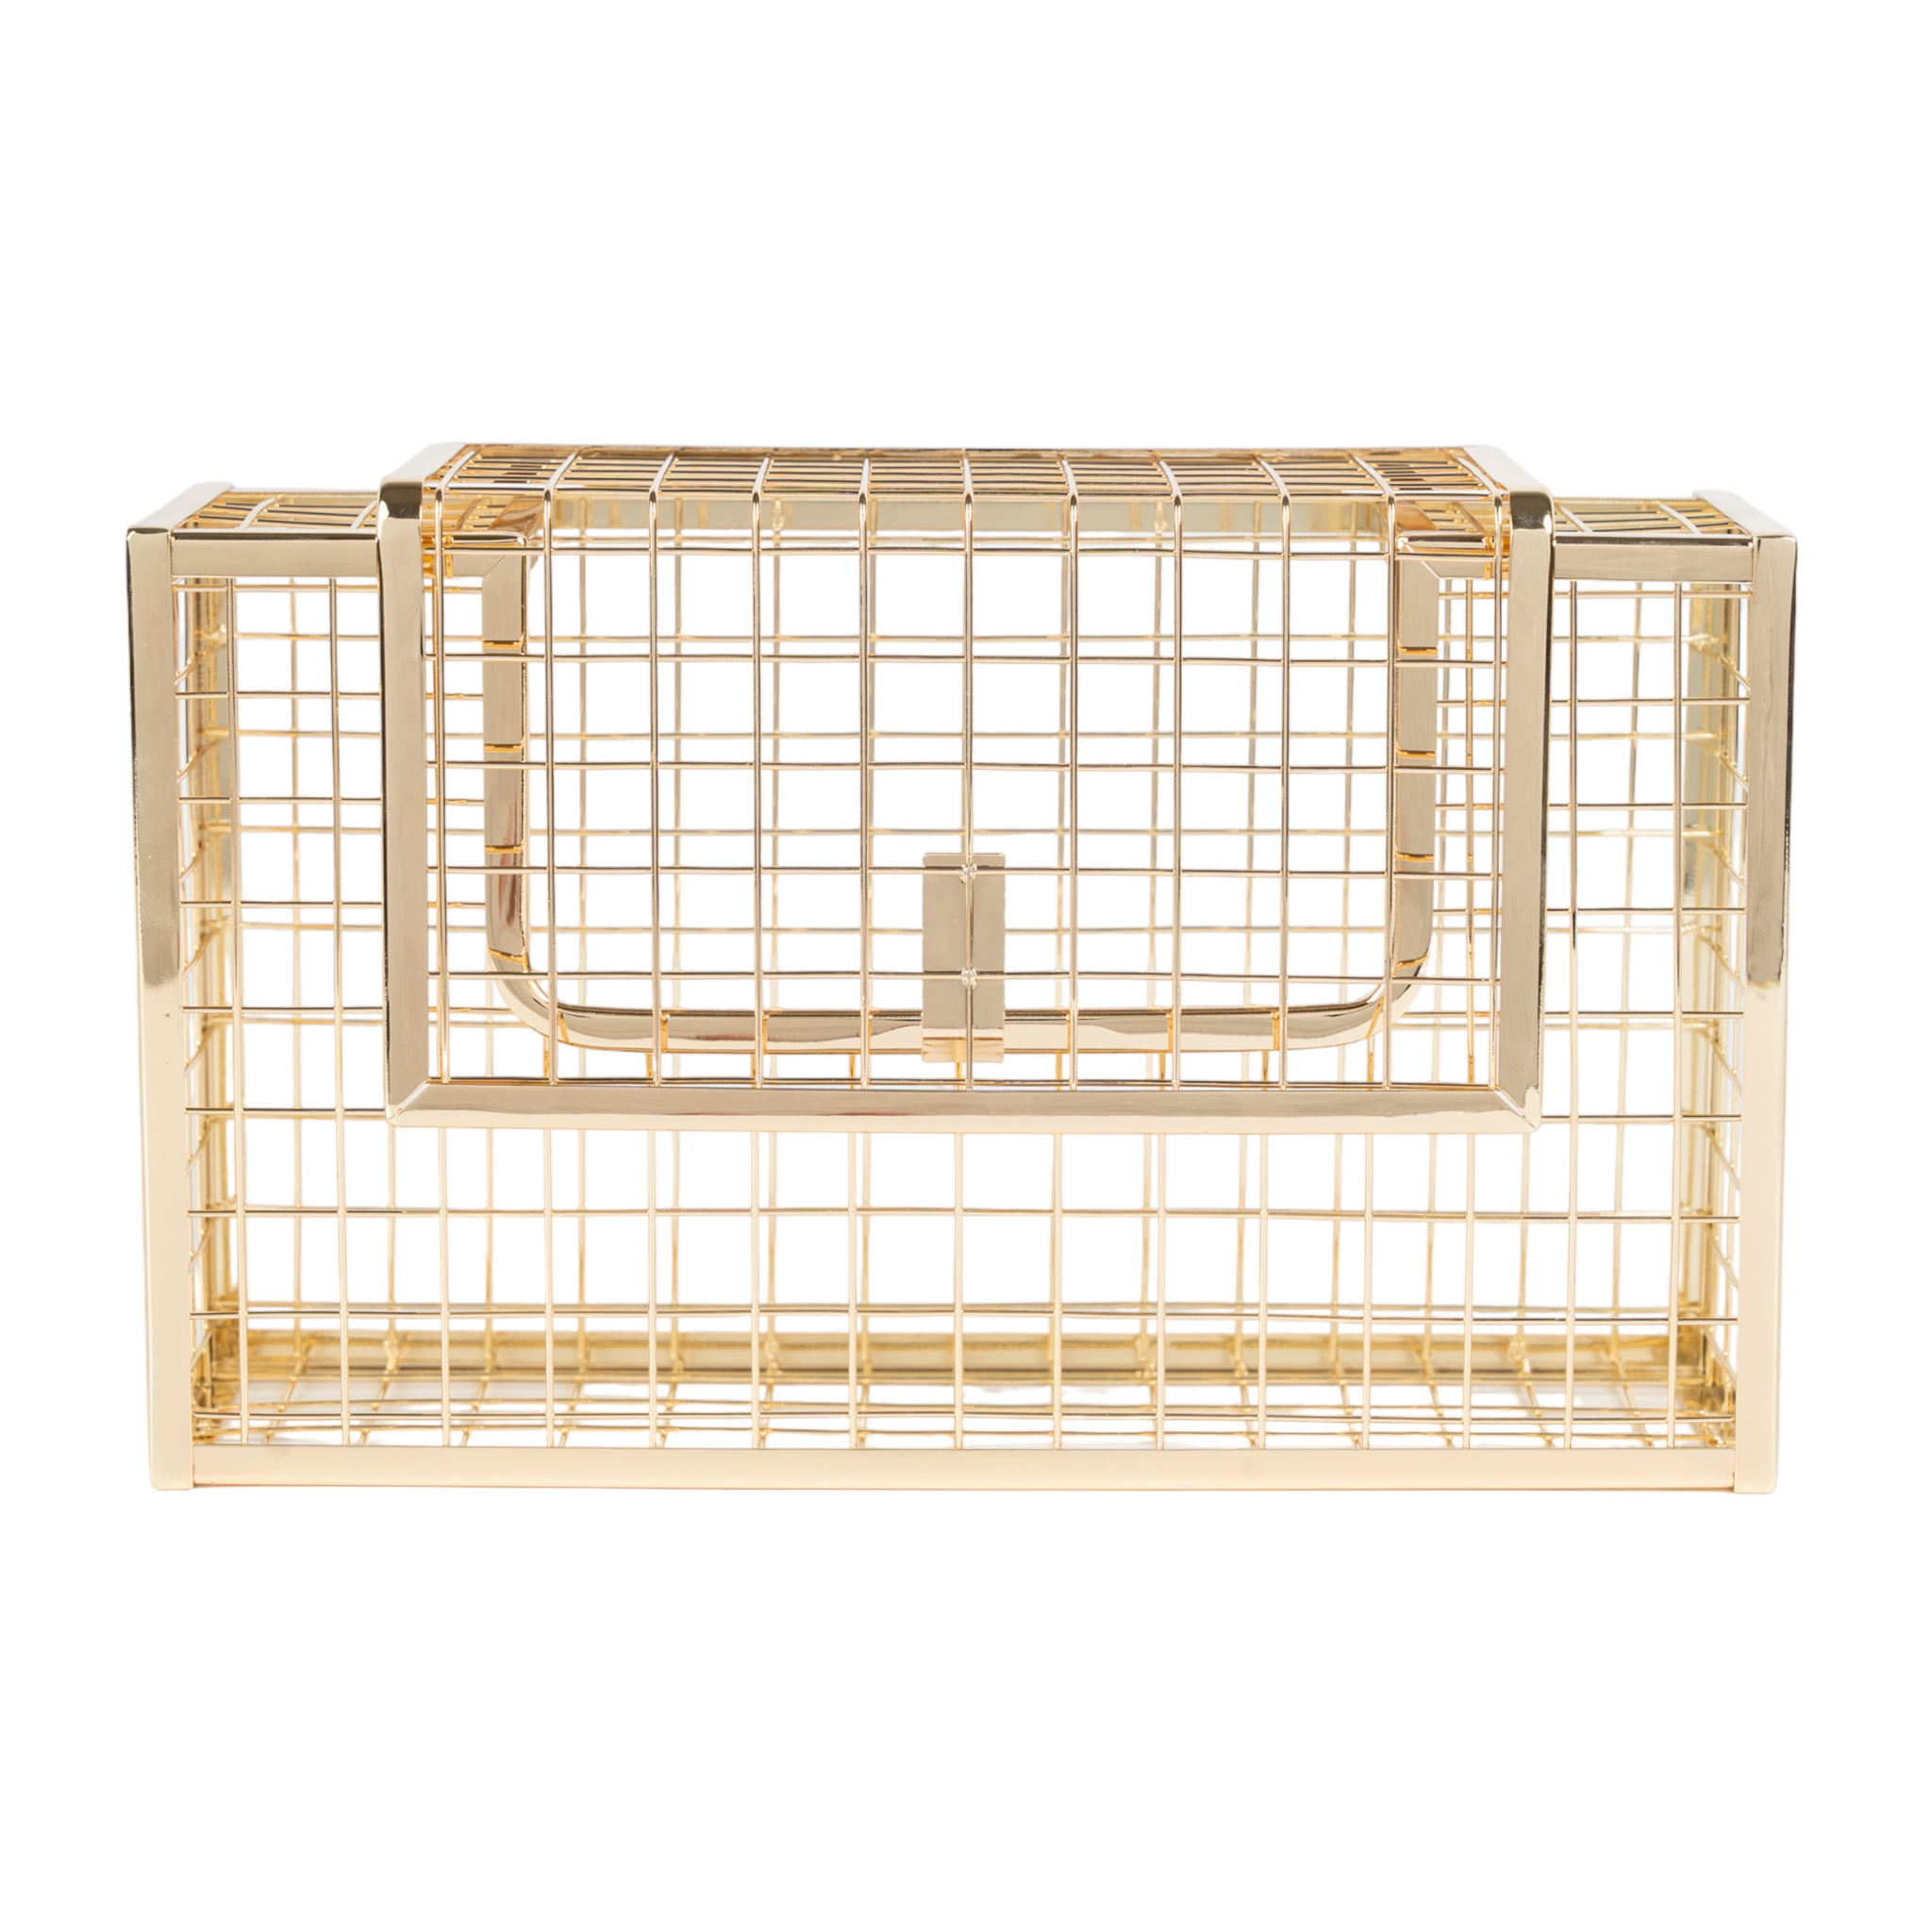 Chokore Metallic Cage Handbag (Golden)